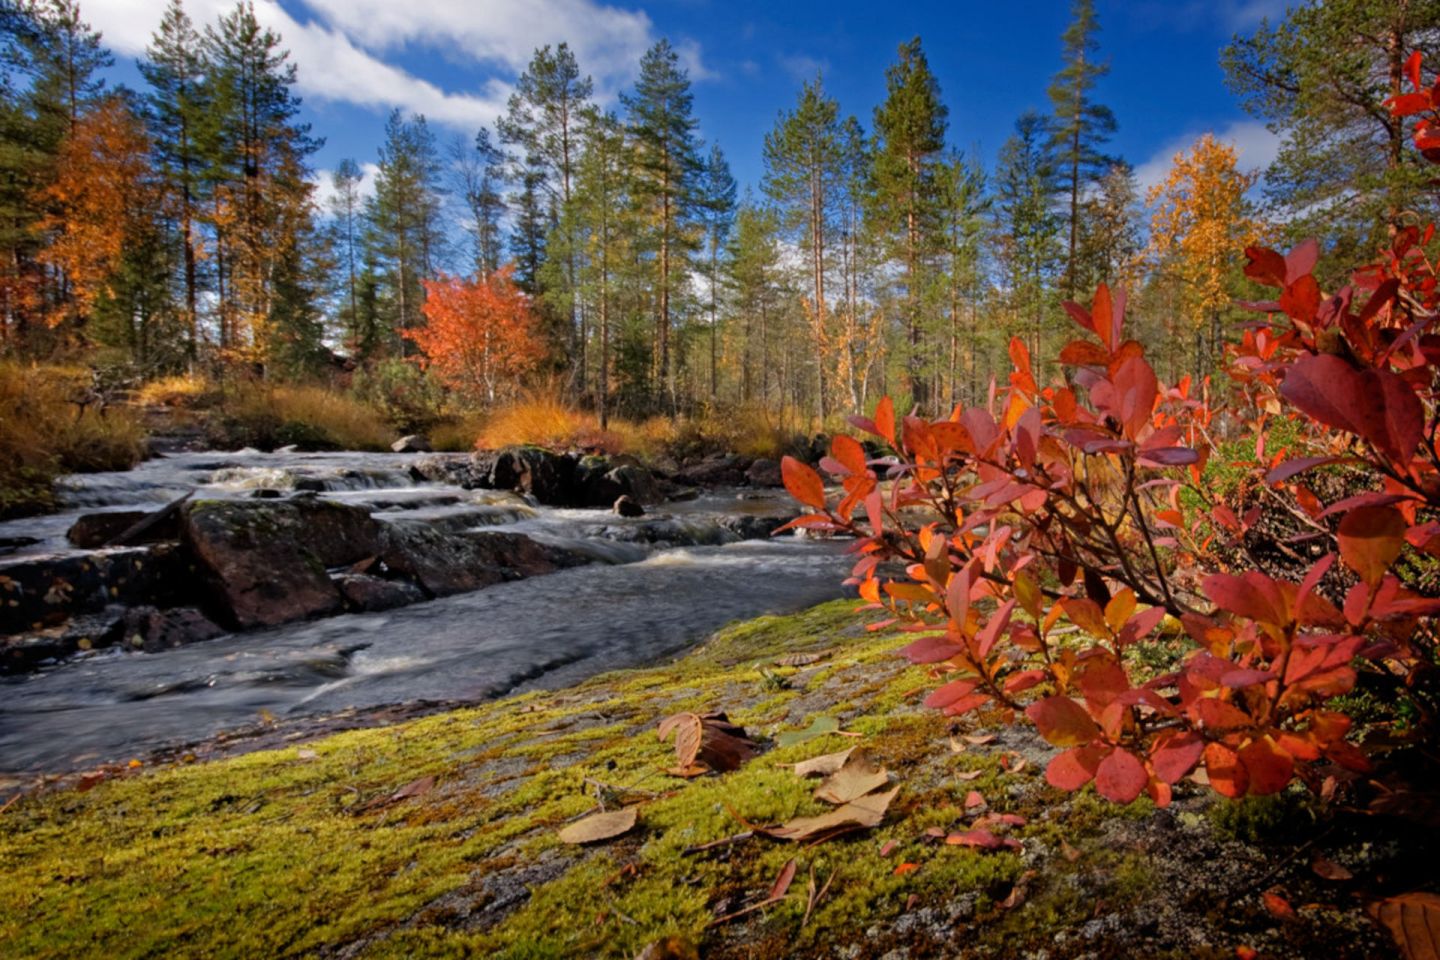 Autumn colors in Kemijärvi, Finland